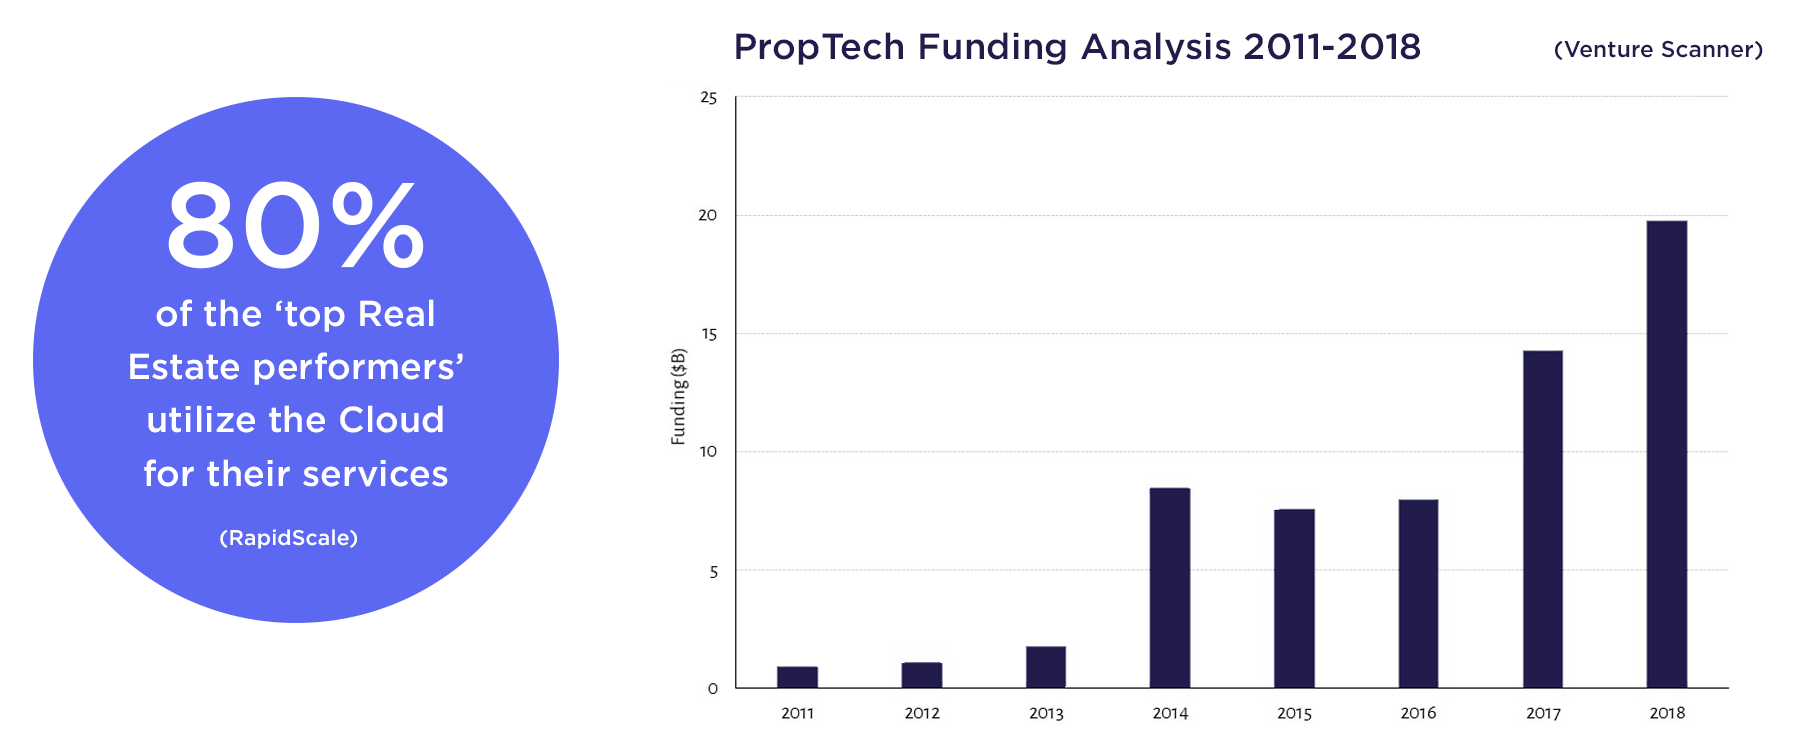 PropTech Funding Analysis 2011-2018